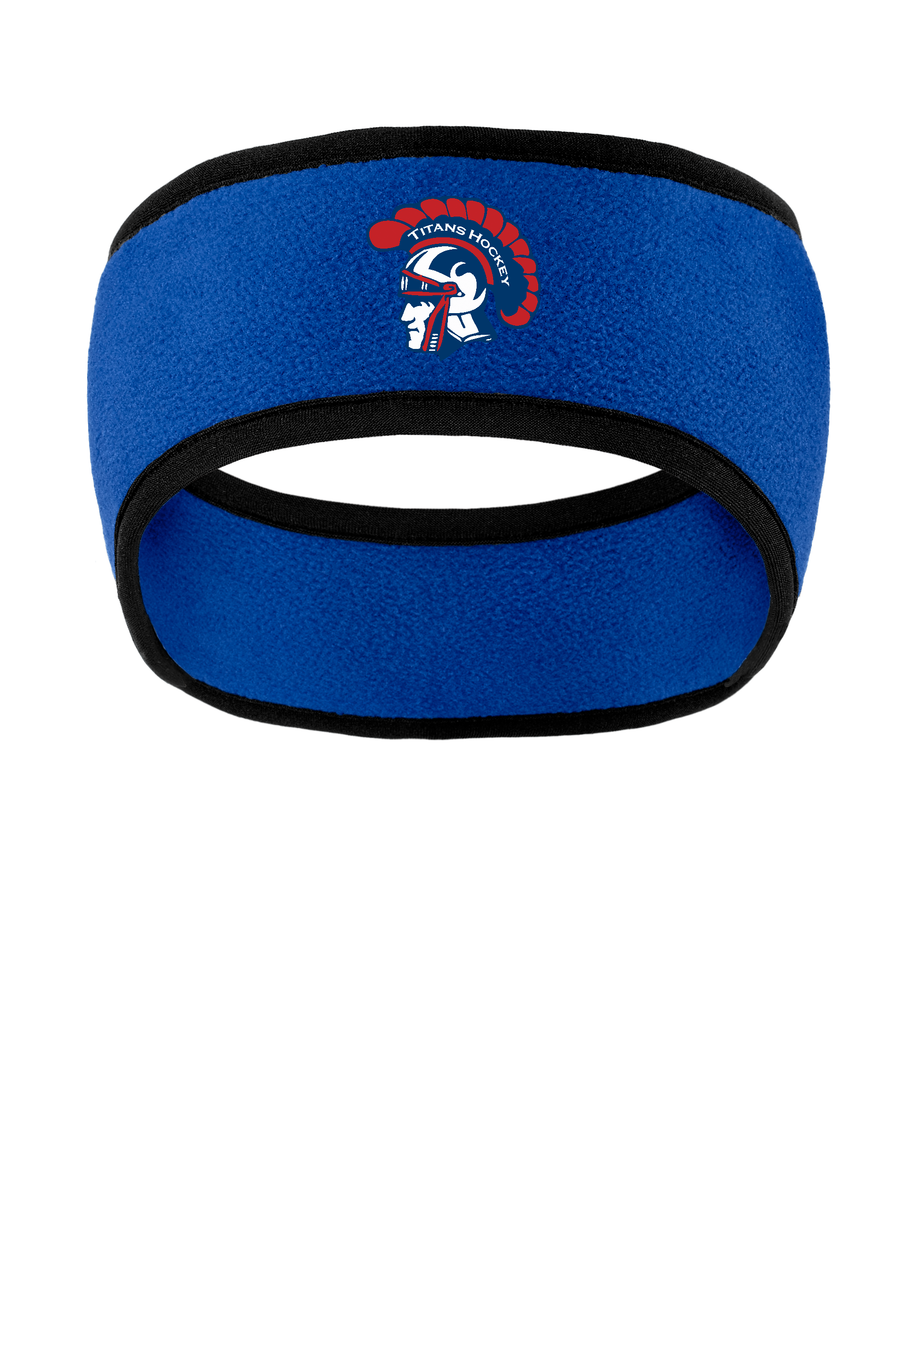 Arizona Titans Hockey - Port Authority Two-Color Fleece Headband